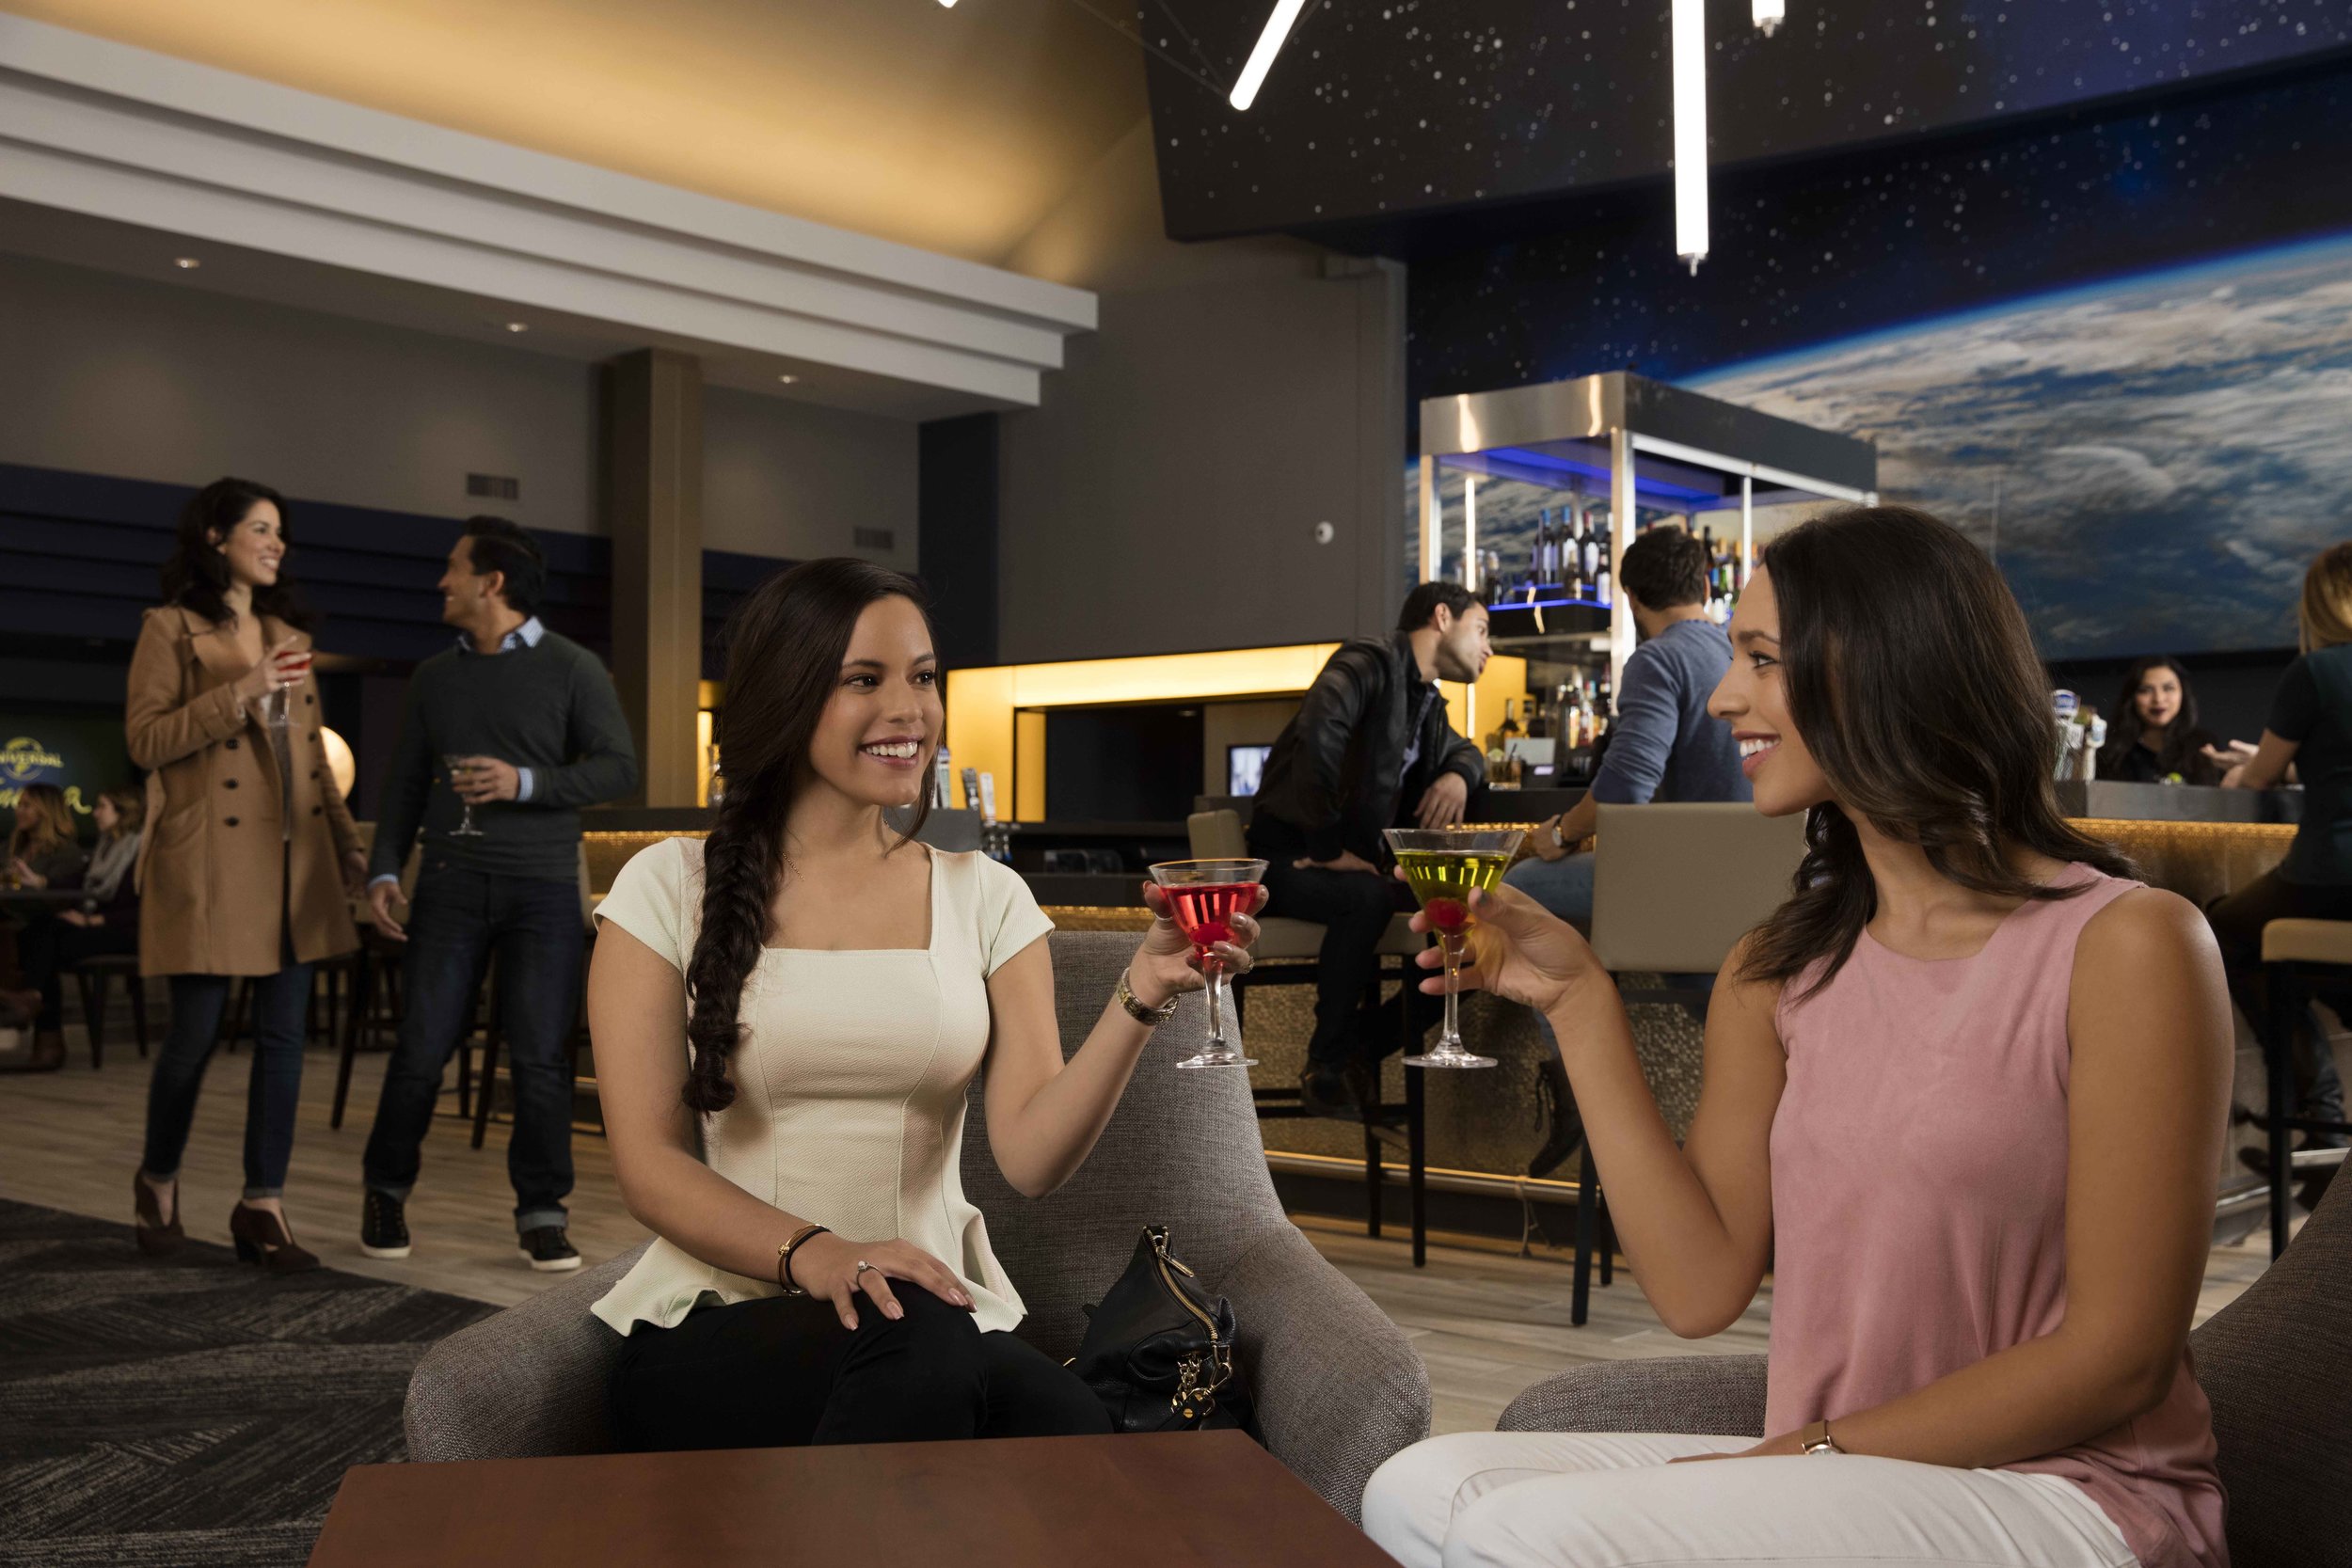 Universal Cinema at CityWalk - Girls with Drinks in Lounge.jpg